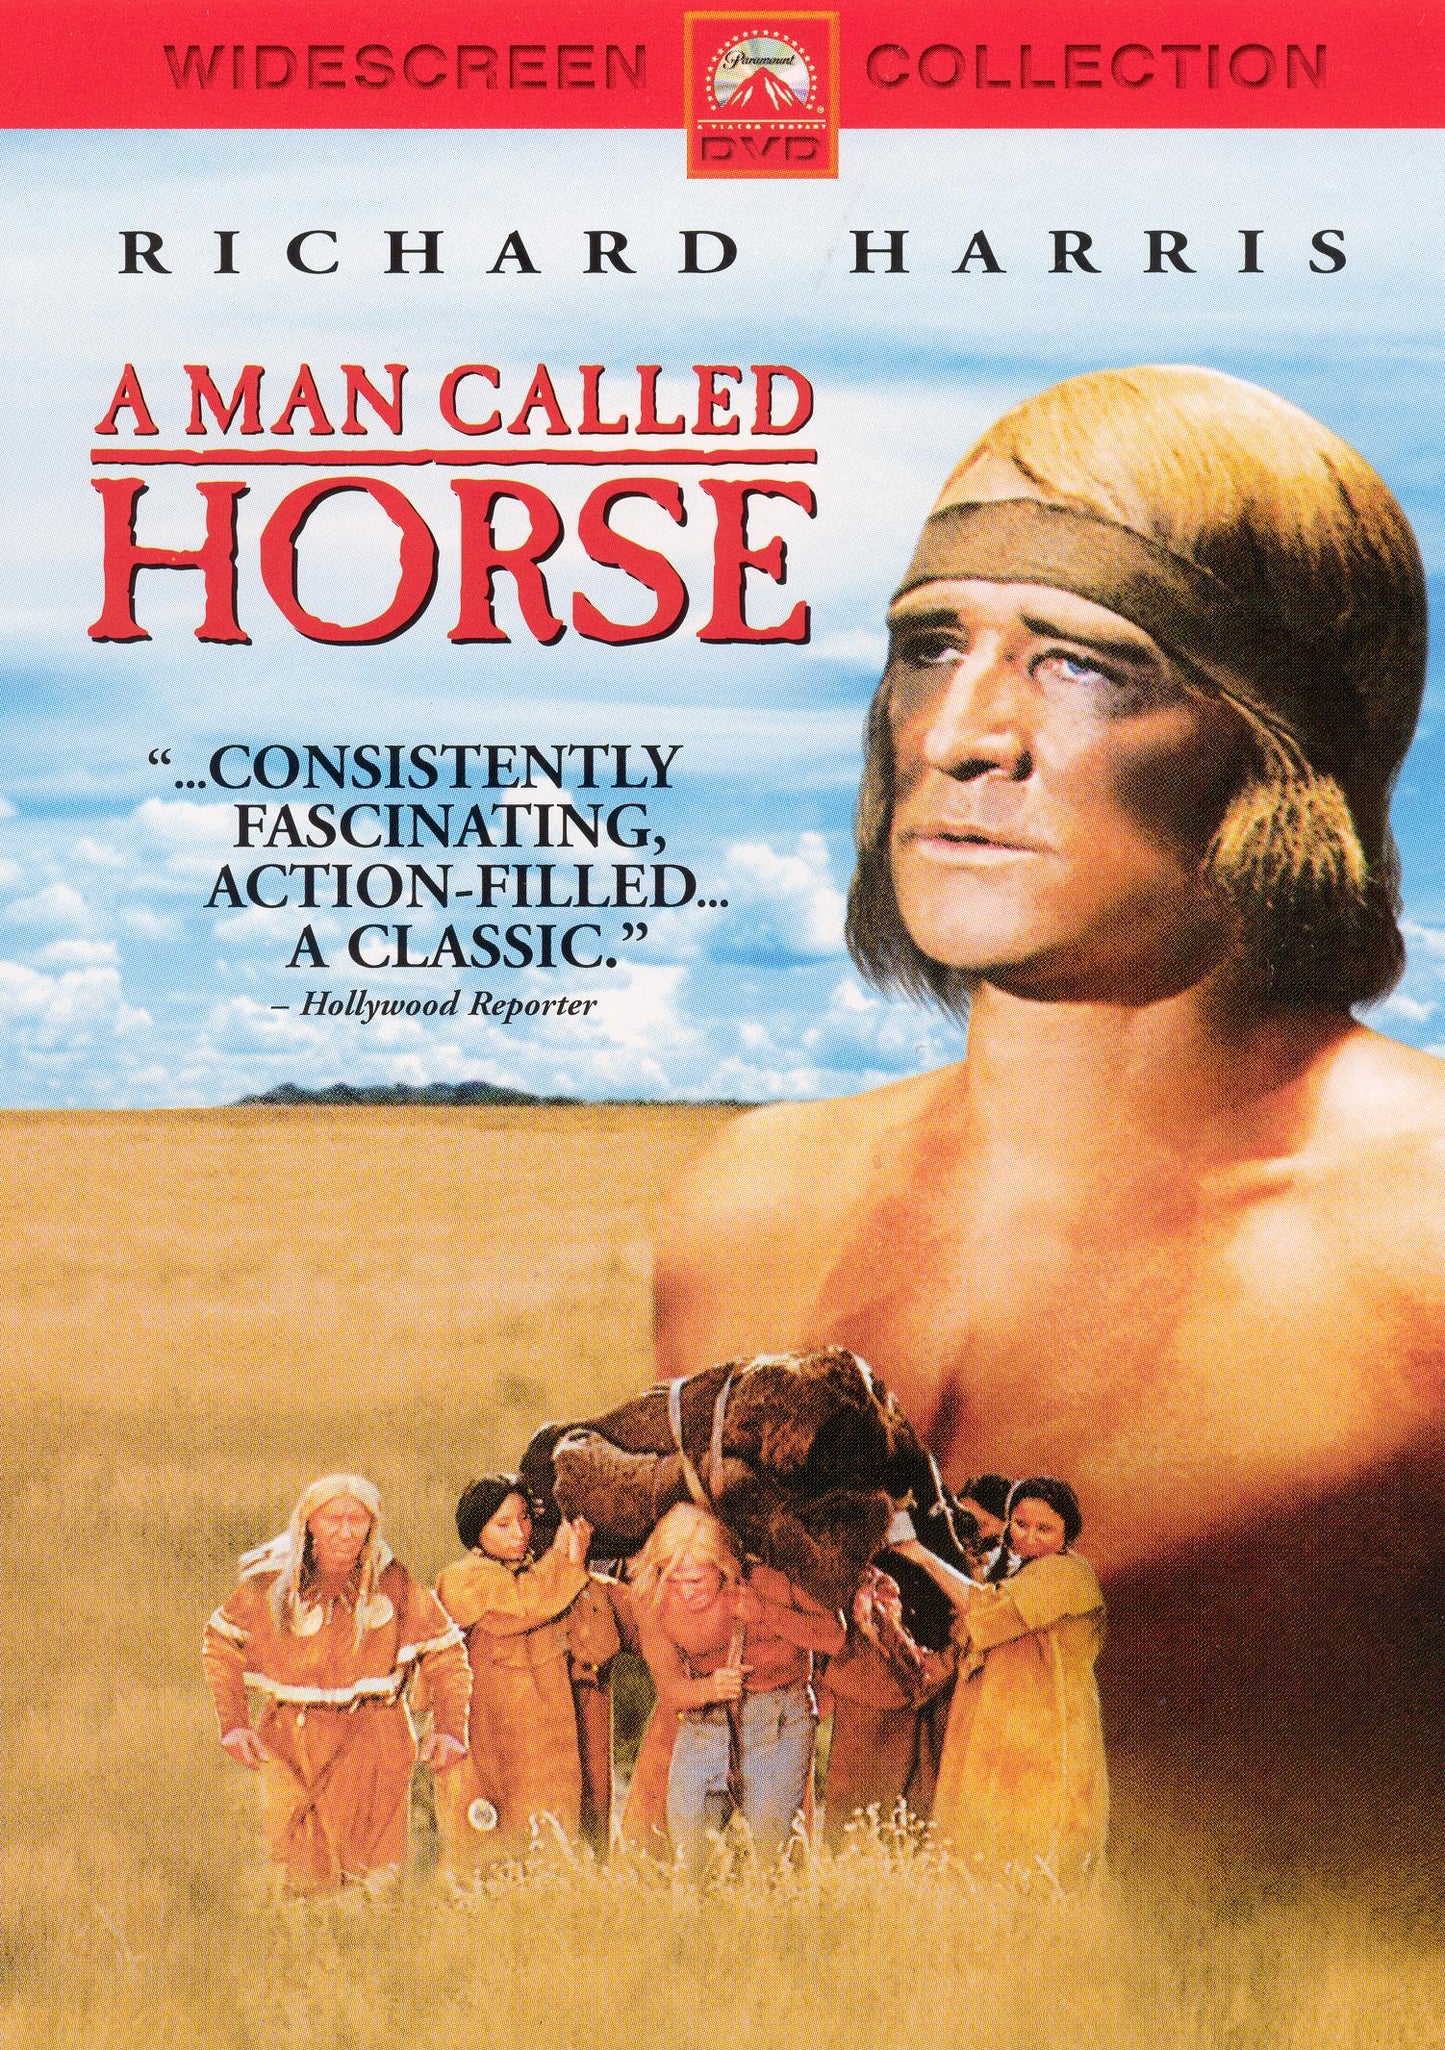 Man Called Horse cover art